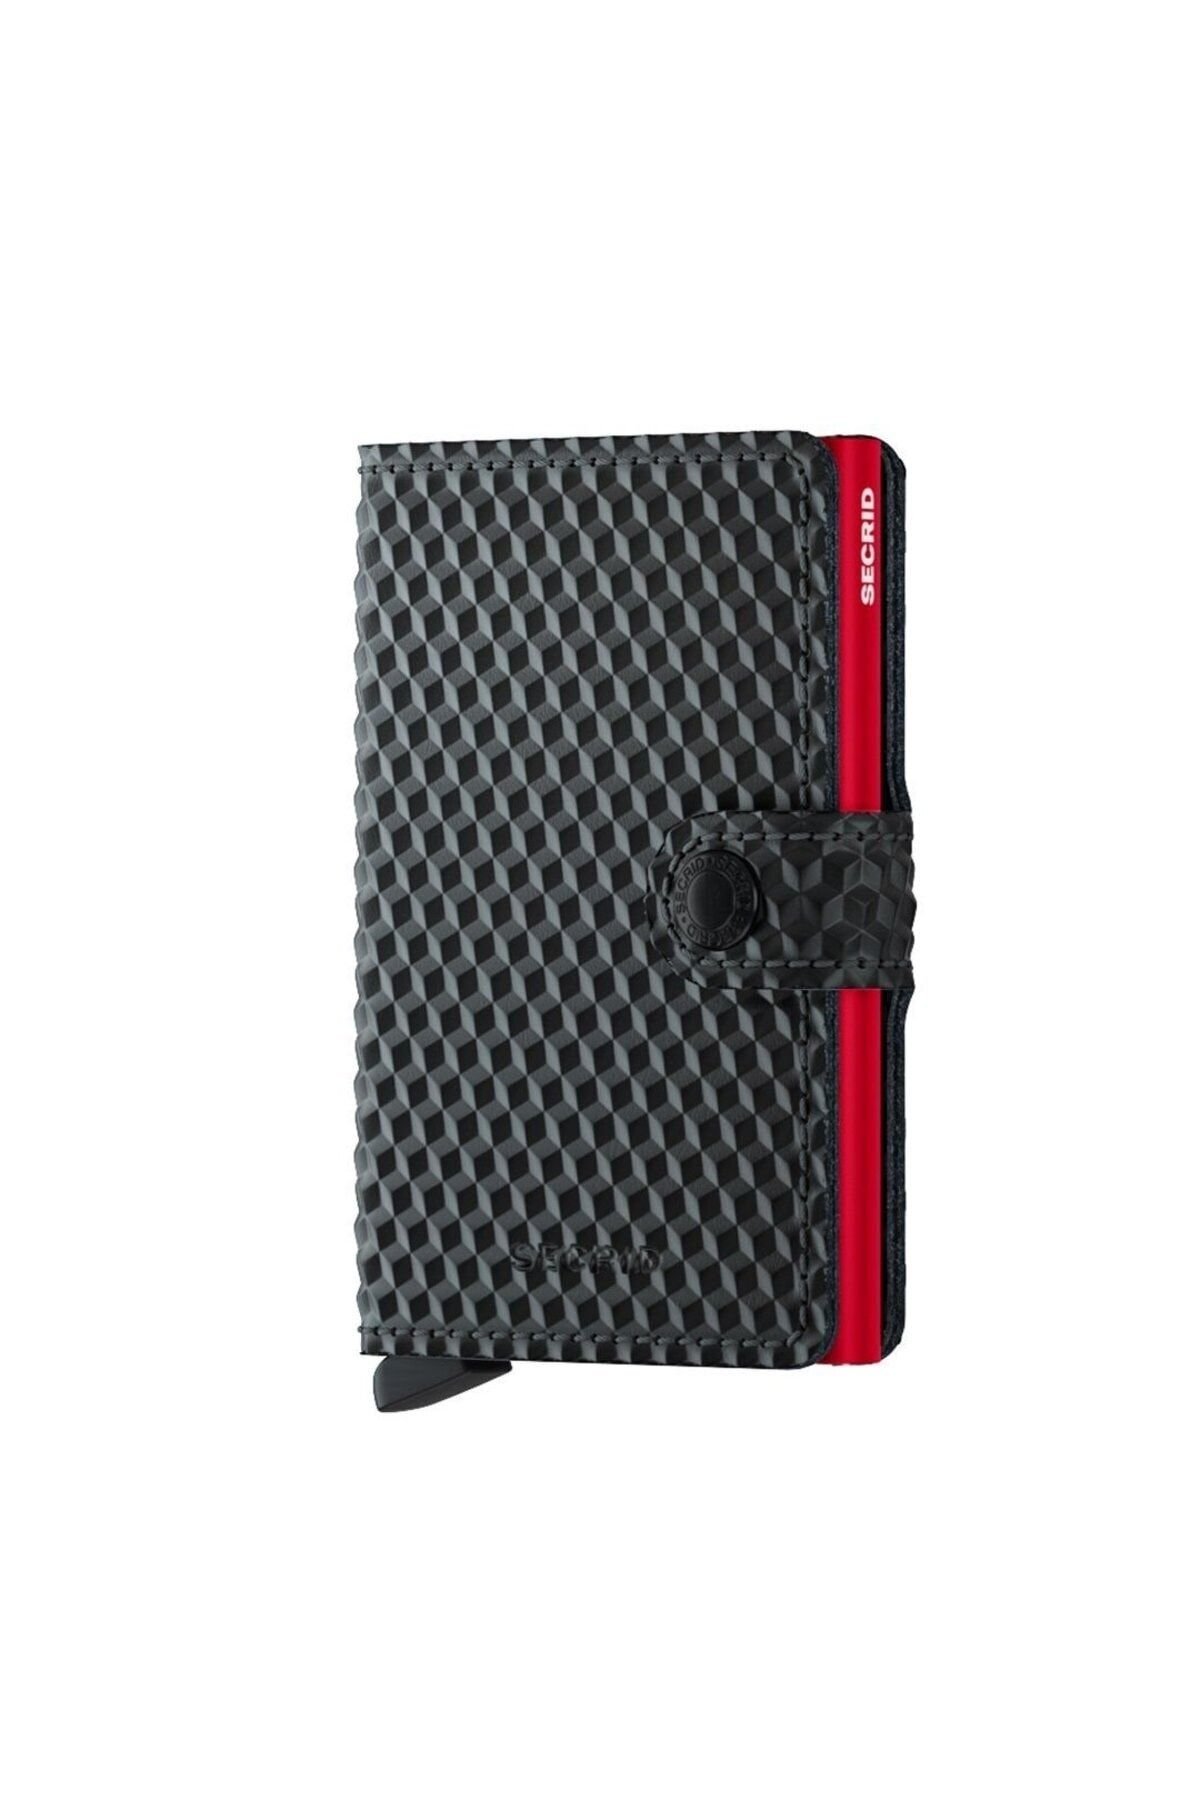 Secrid Miniwallet Cubic Black Red, N/A - %100 Orjinal Avrupa Derisi Cüzdan